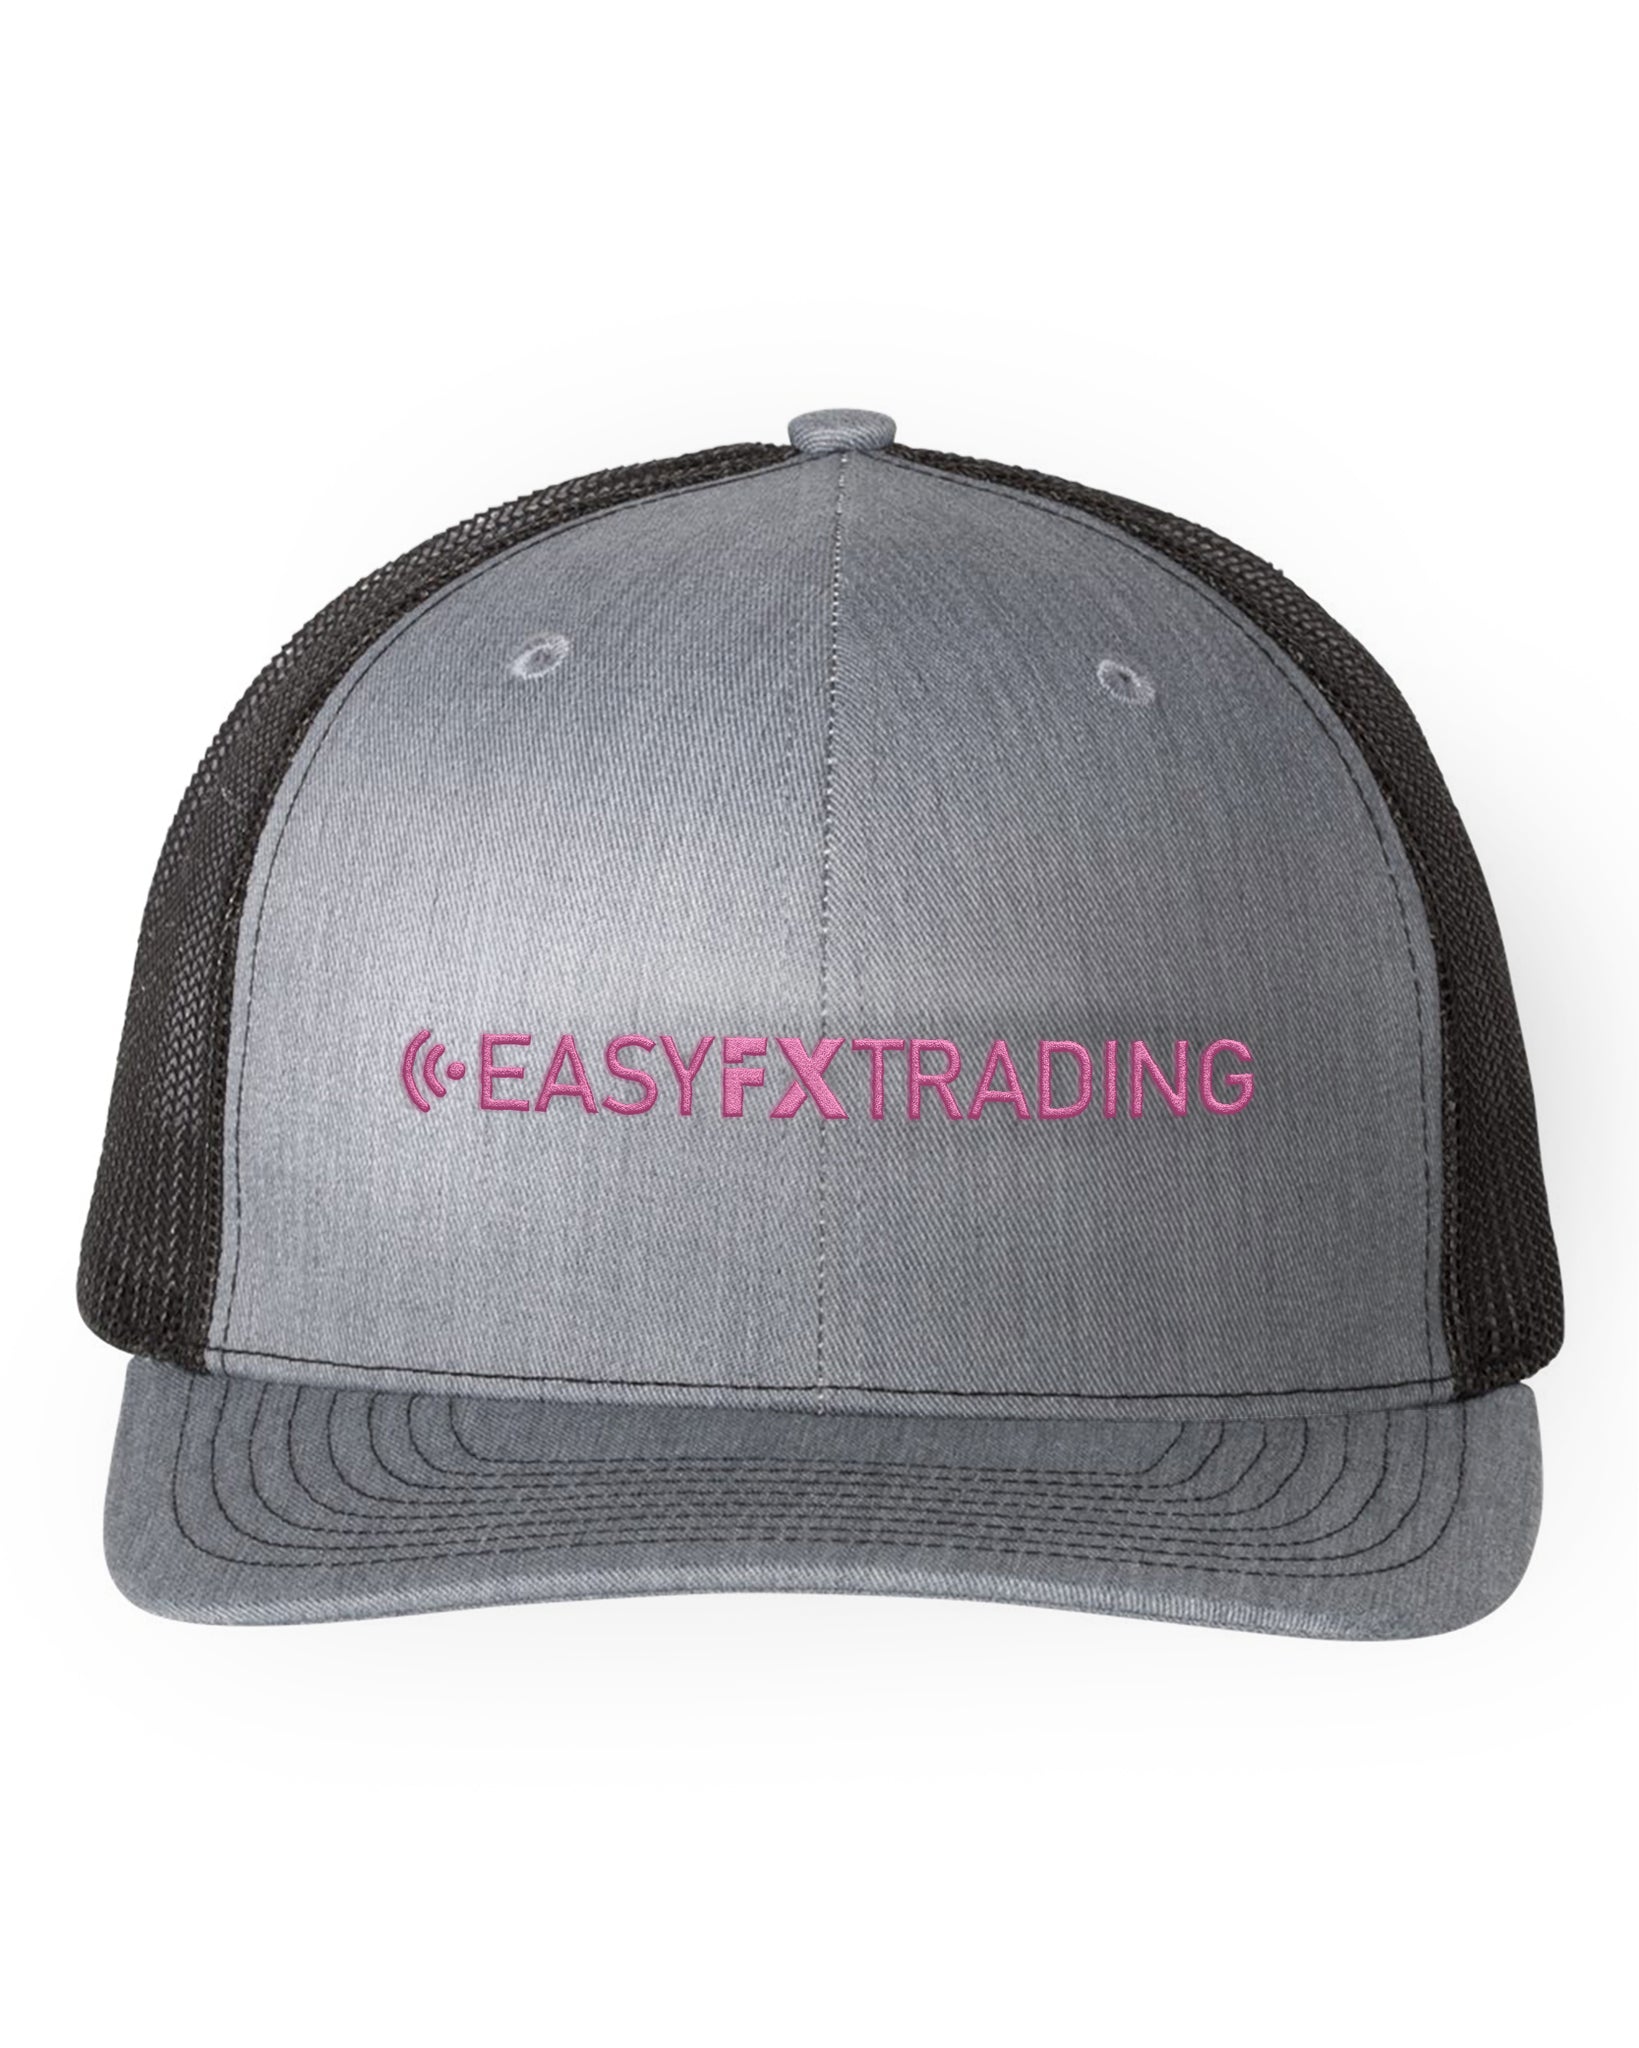 Logo-Long-Pink on Black & Gray Hat